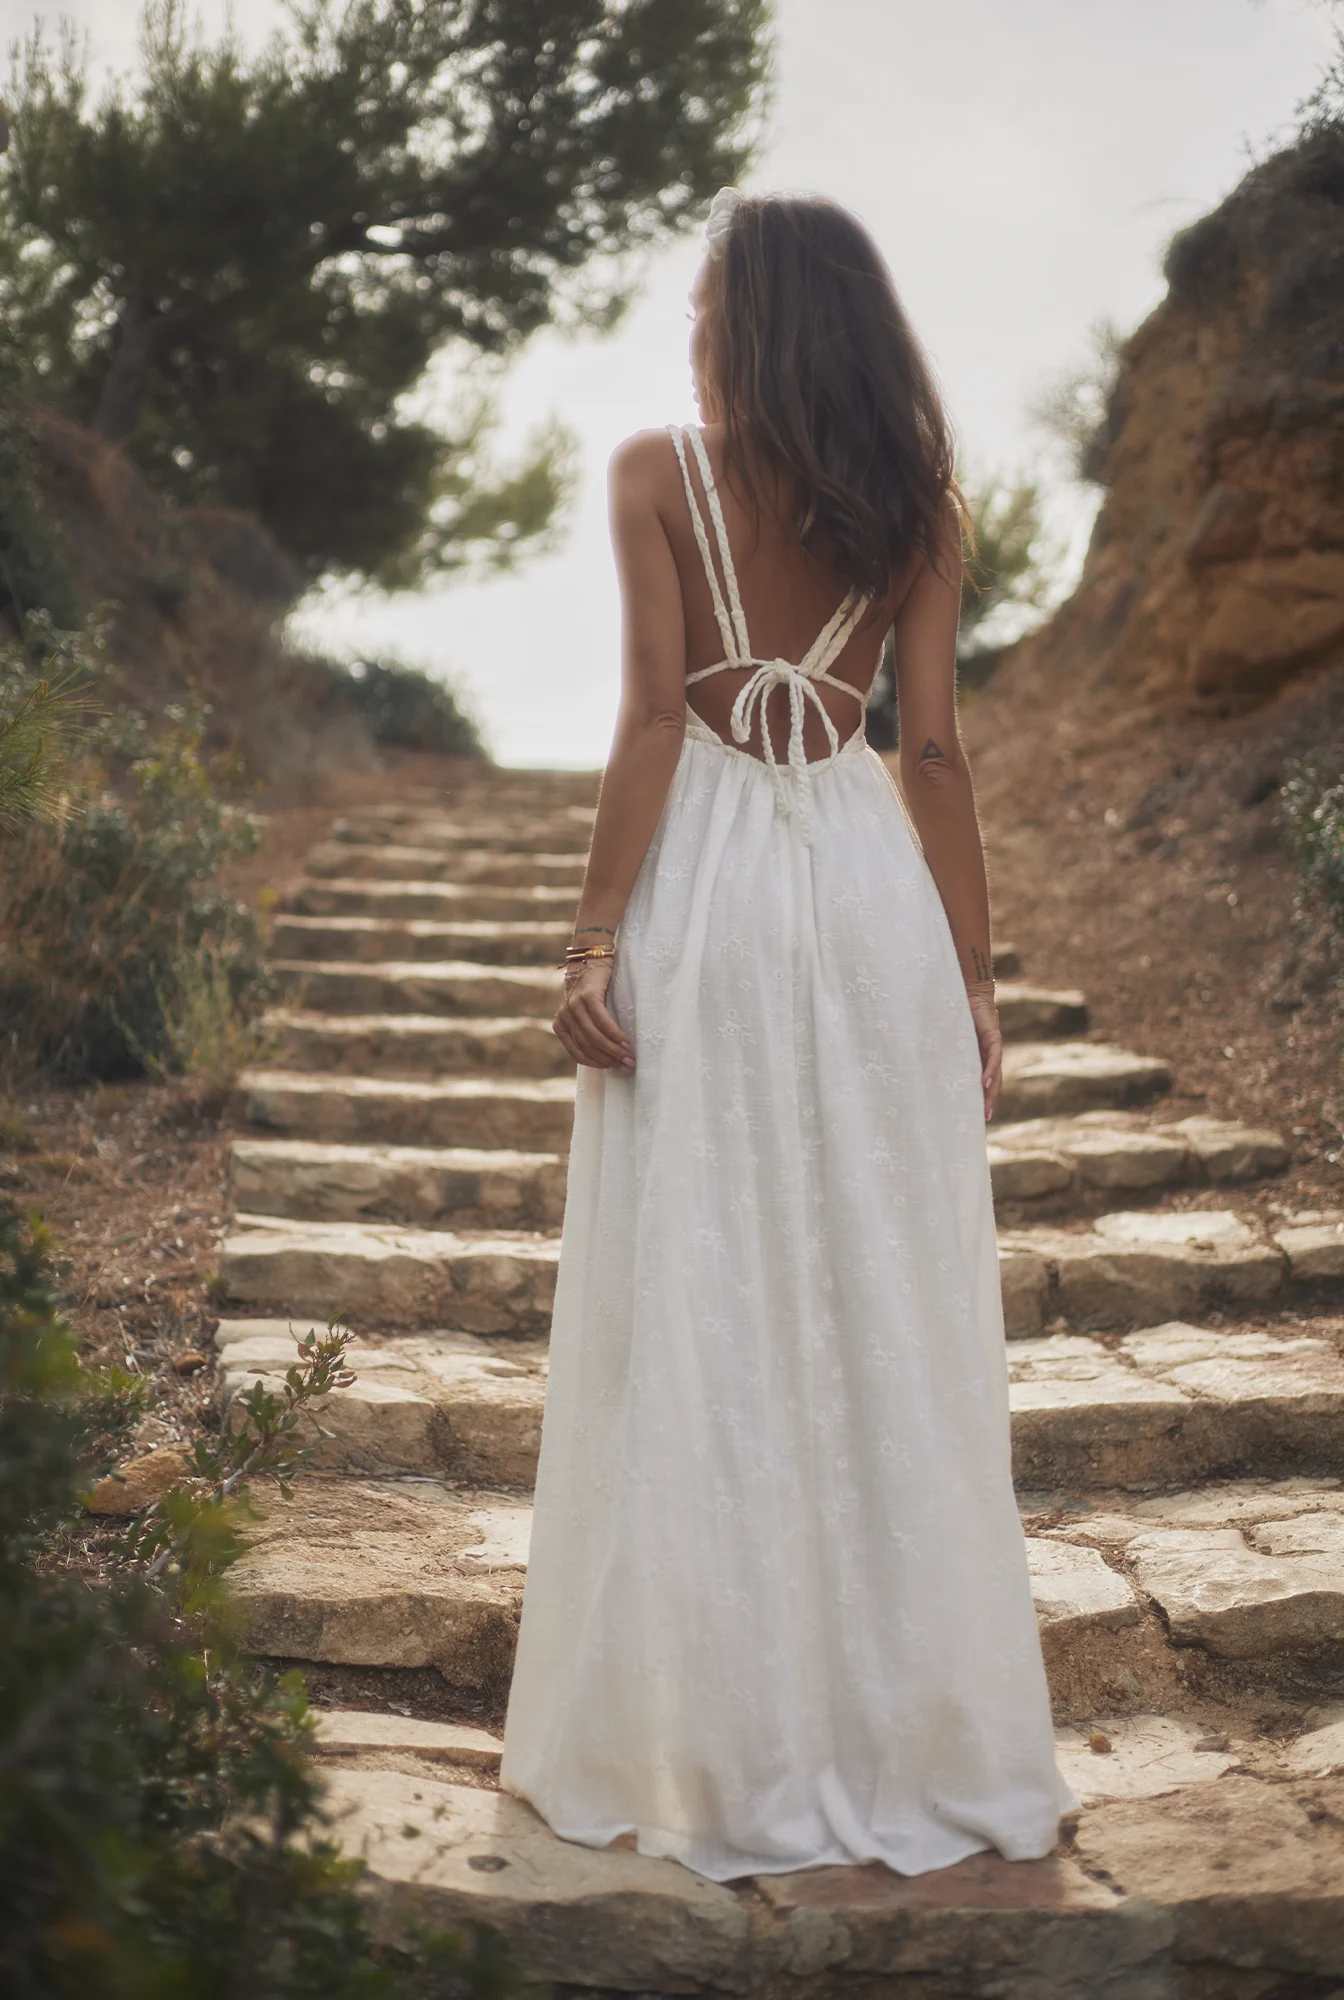 Sukienka boho na wesele – stylizacje na rustykalne wesele latem